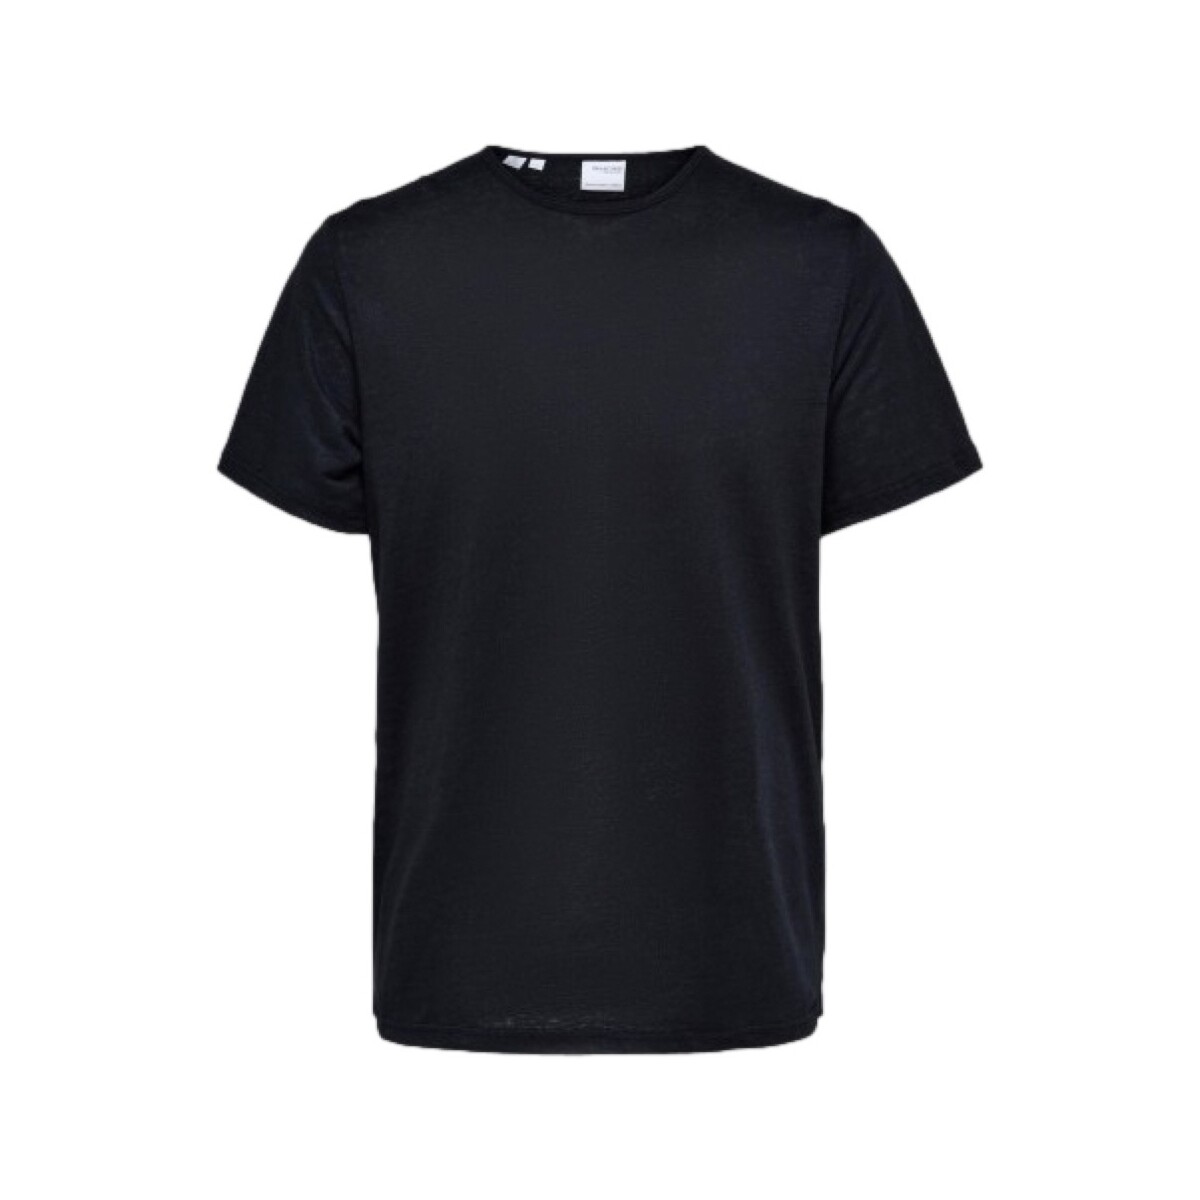 textil Herr T-shirts & Pikétröjor Selected T-Shirt Bet Linen - Black Svart